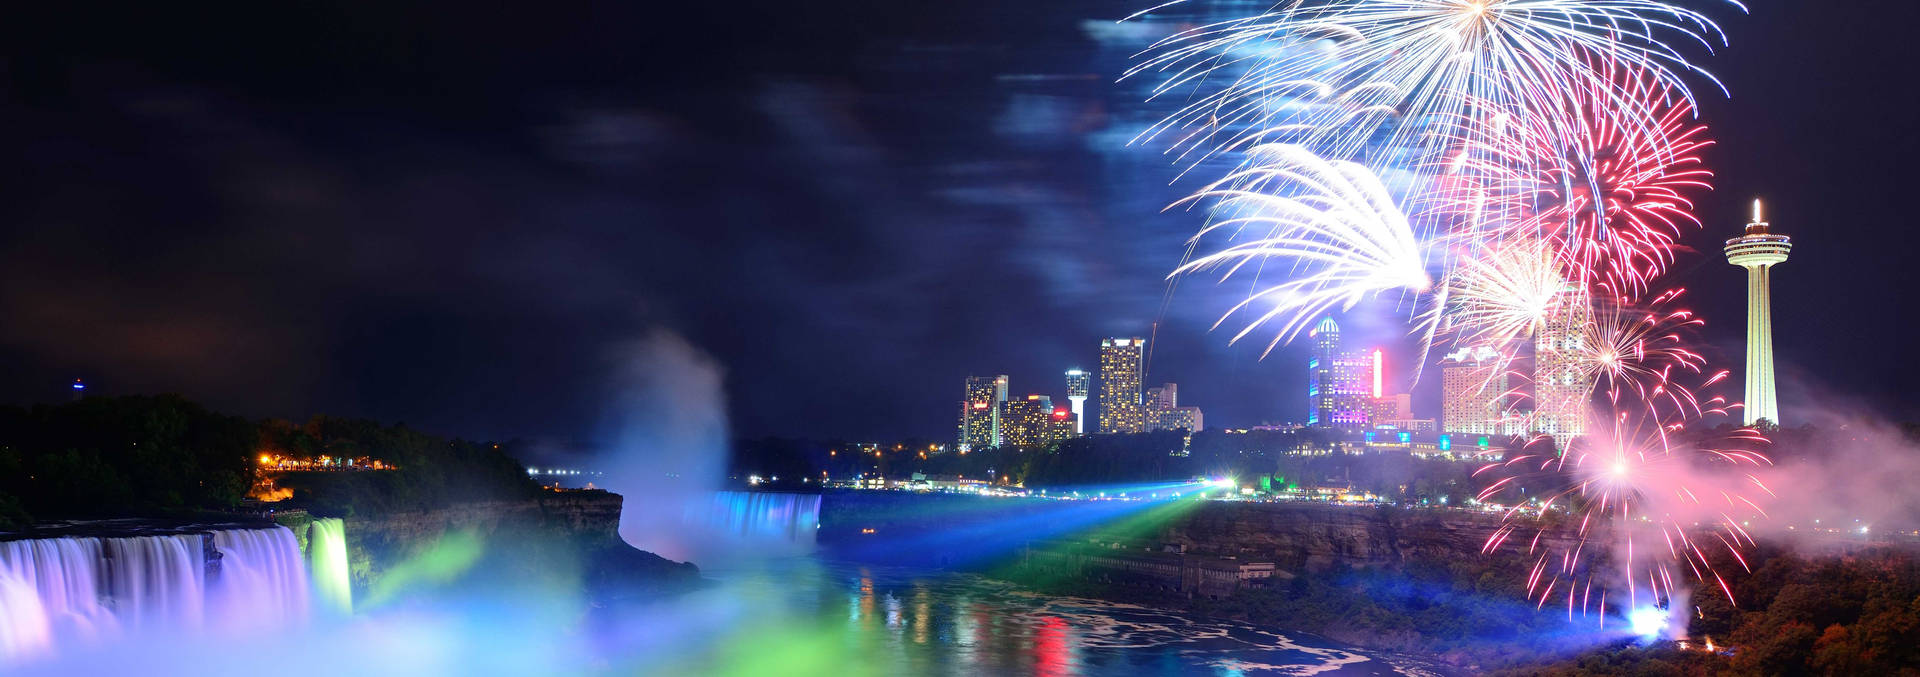 Niagara Falls Fireworks Display Background